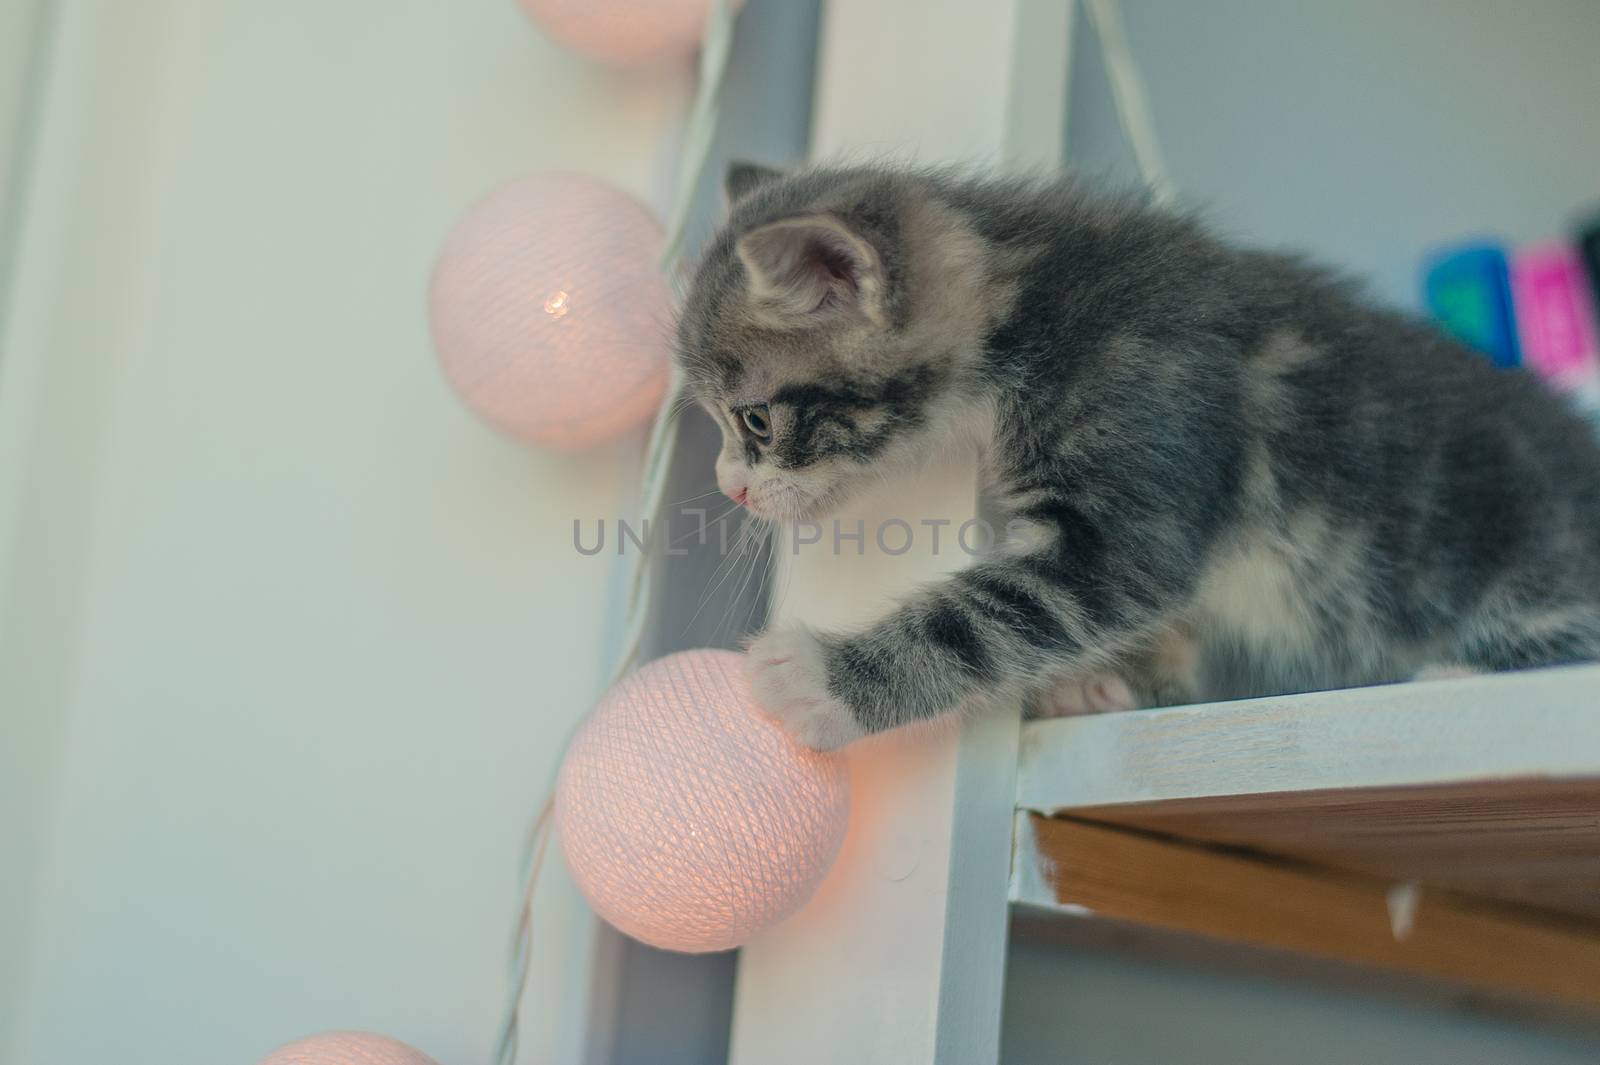 little gray cat on a white shelf near the light bulbs by chernobrovin